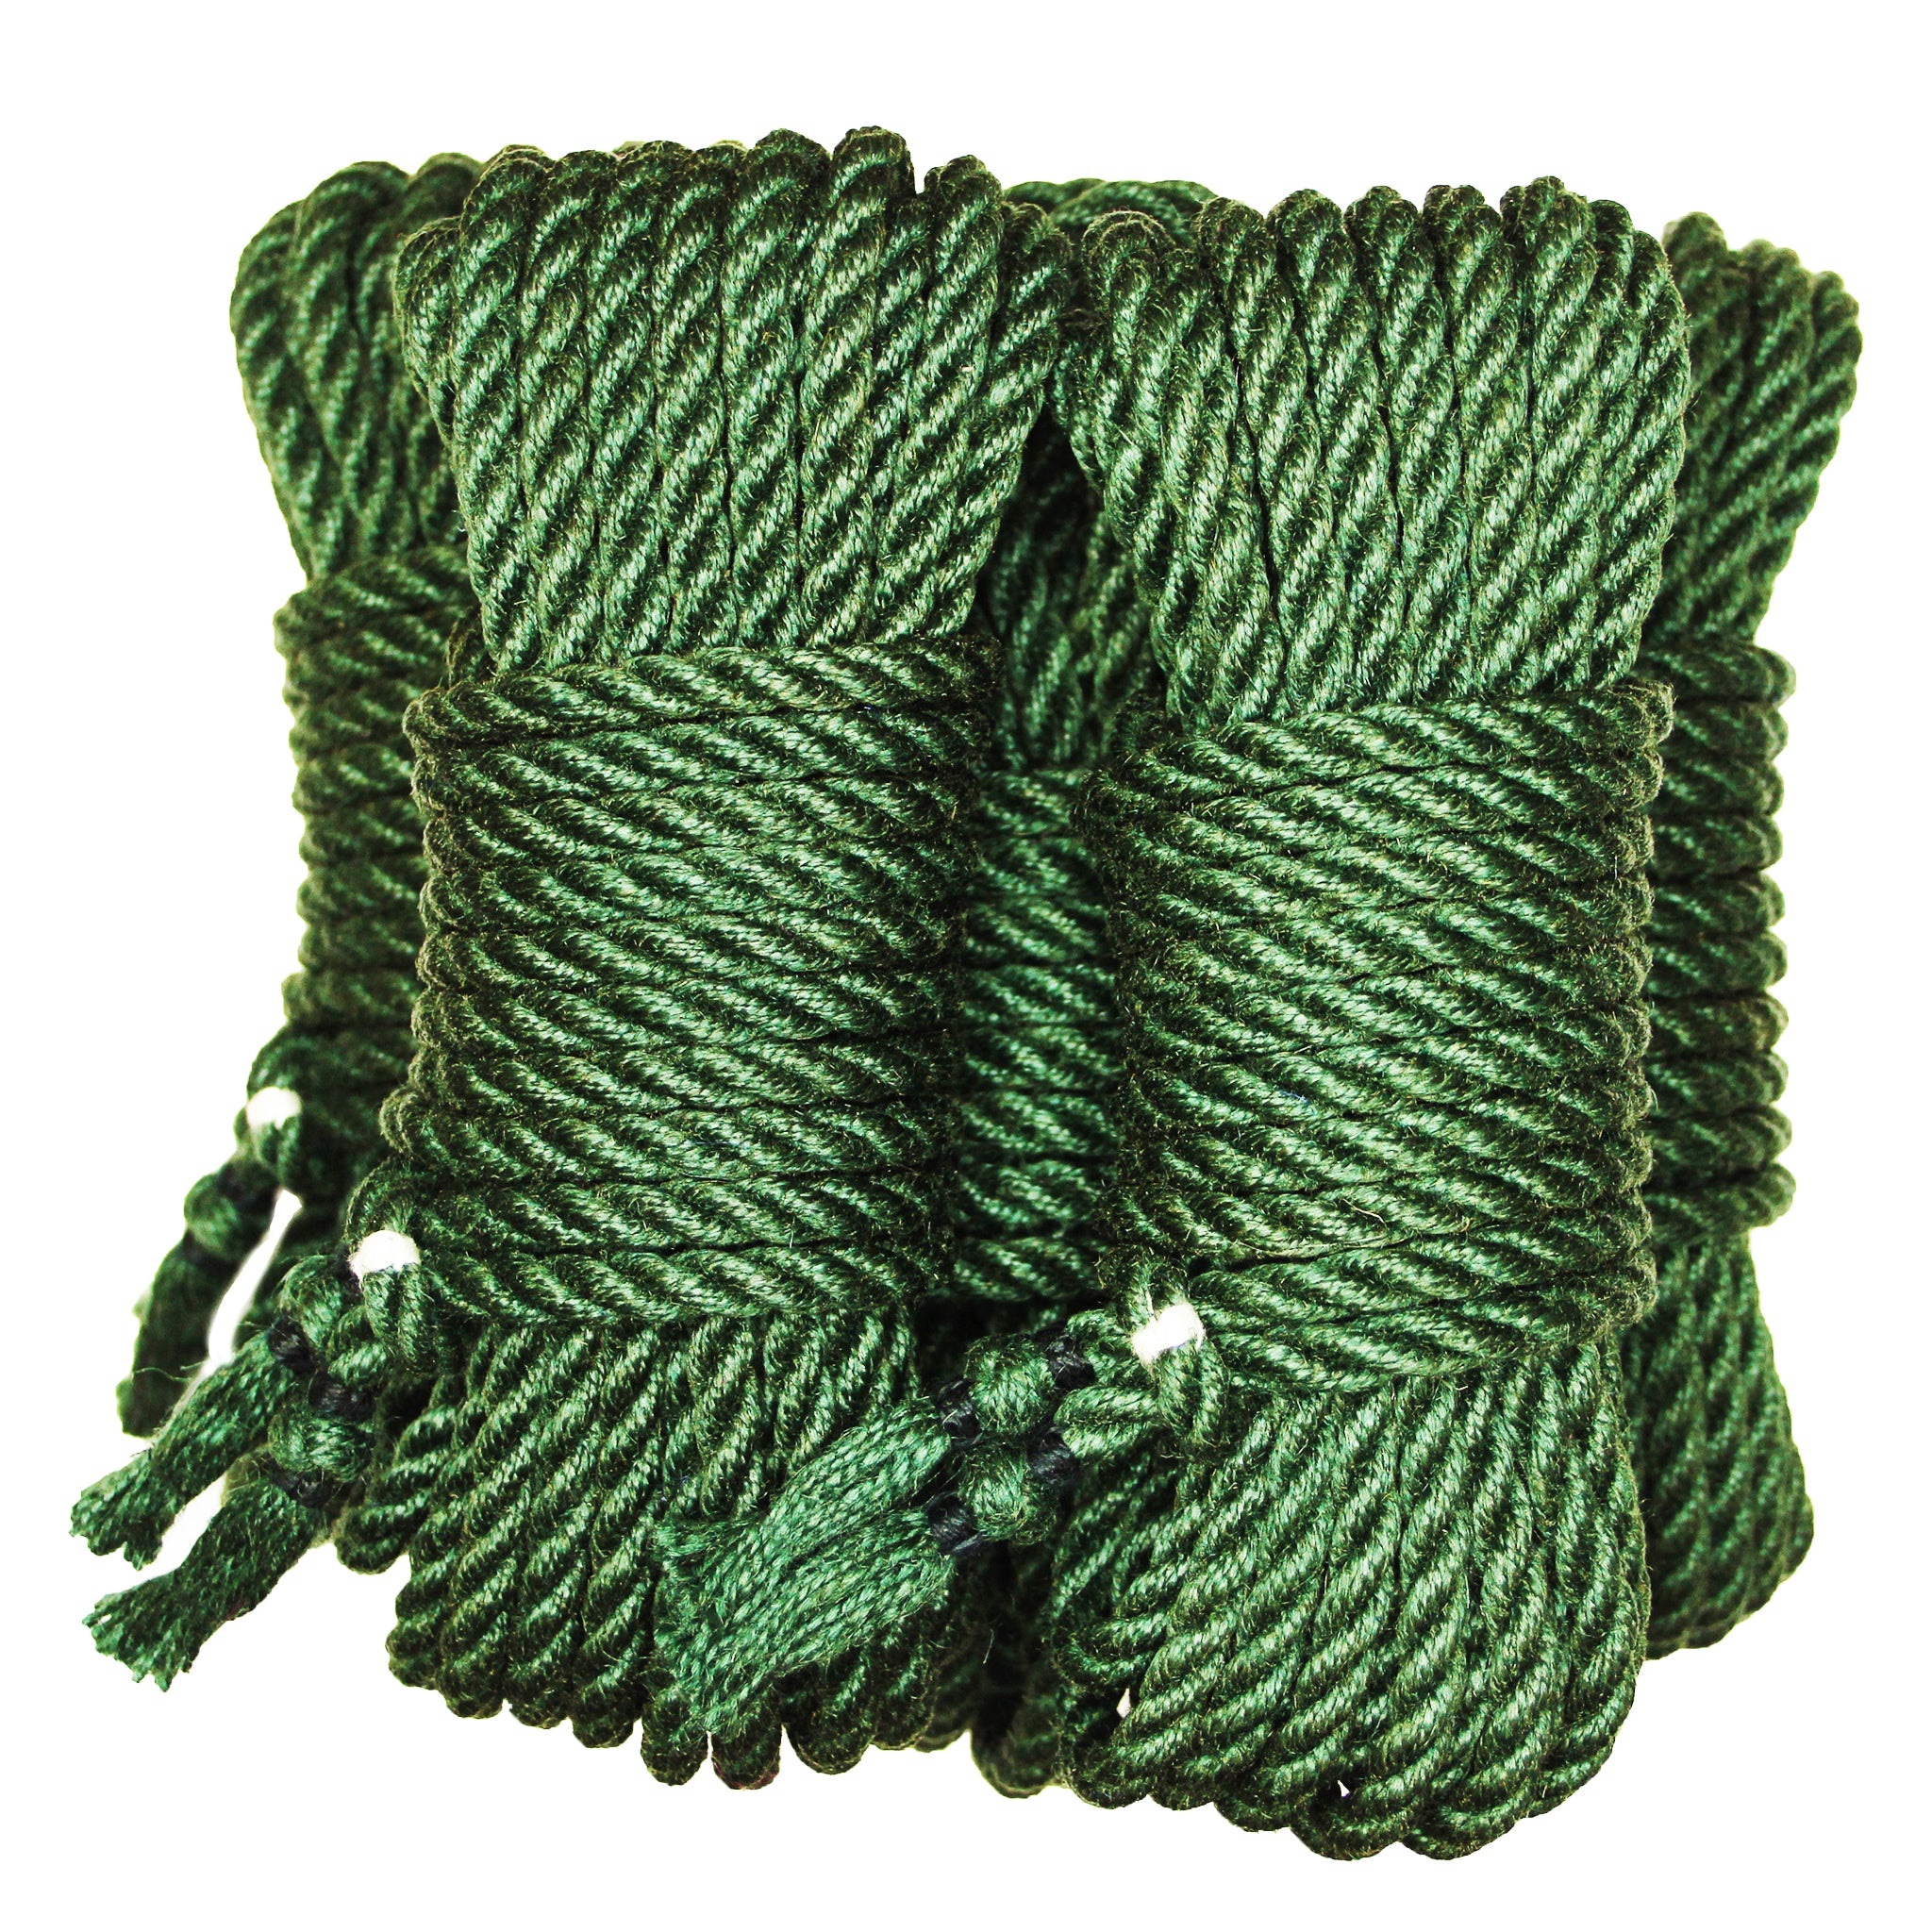 Chroma Red 8 jute rope (8m x 5-pack) – Douglas Kent Rope